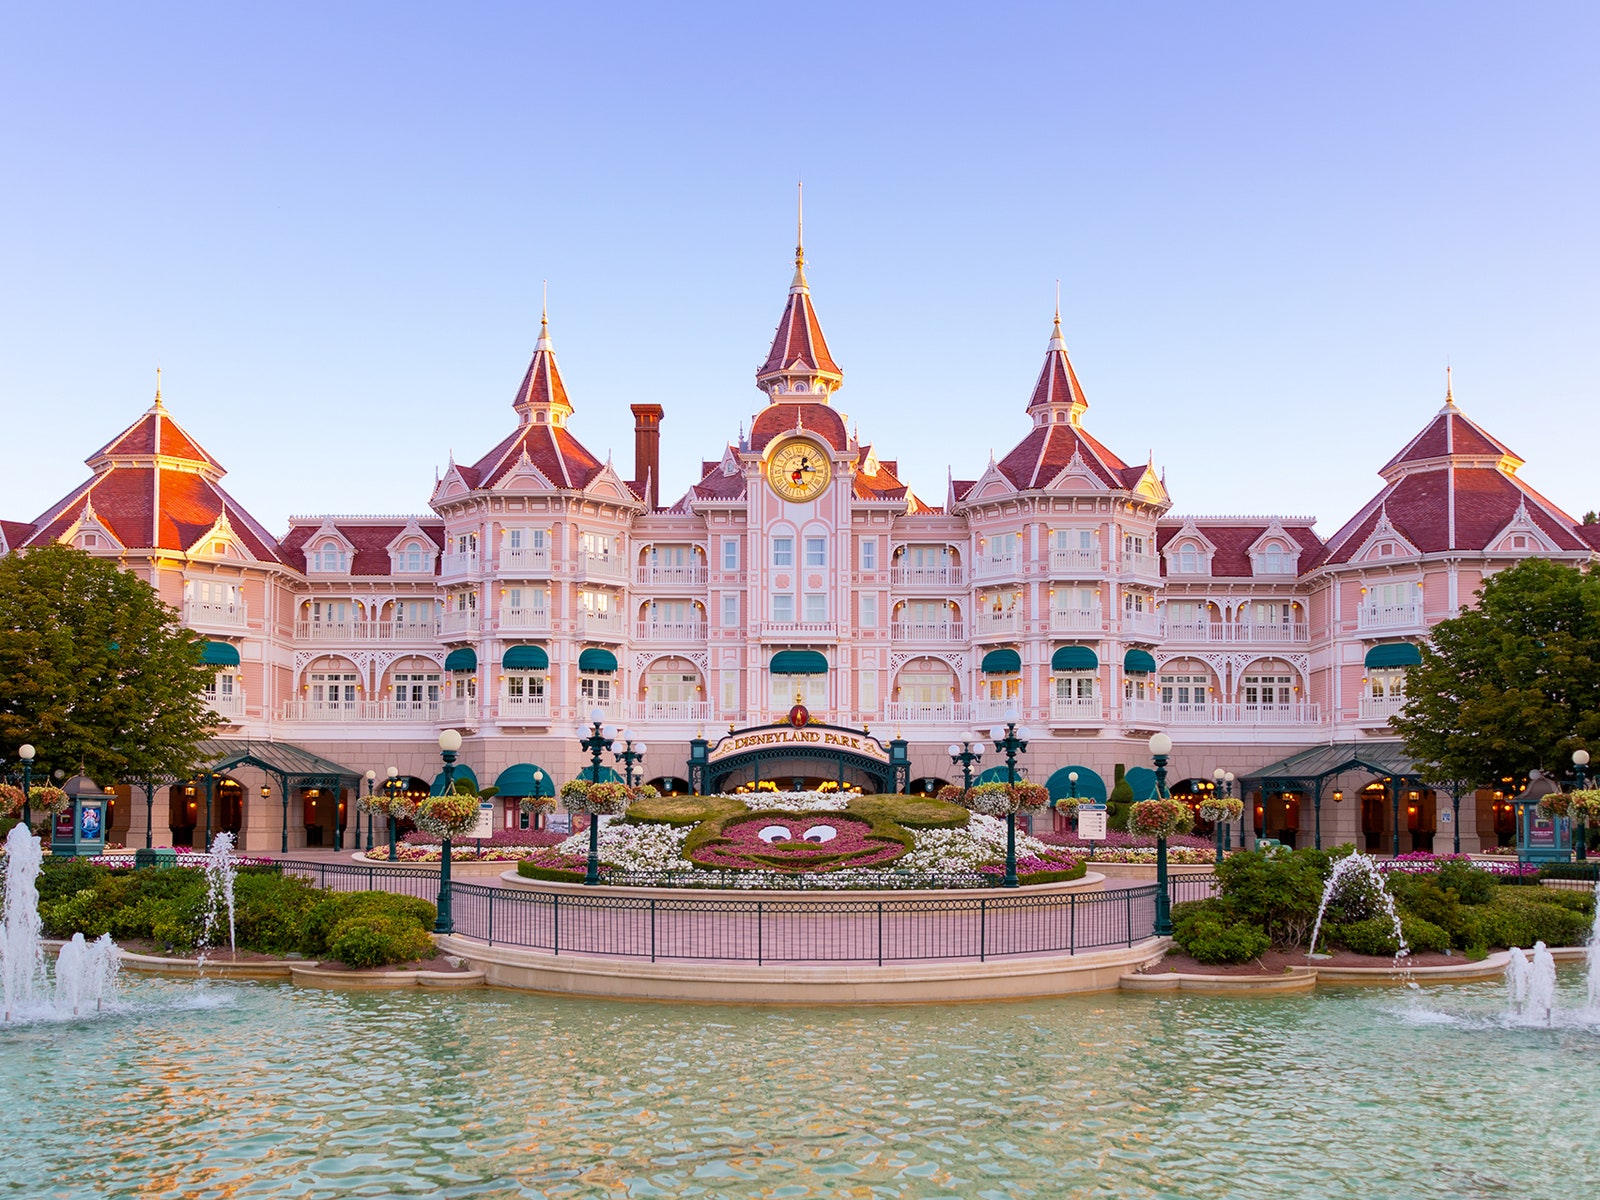 A stay at the refurbed Disneyland Hotel Paris guarantees adrenalin-fuelled fun and magical memories